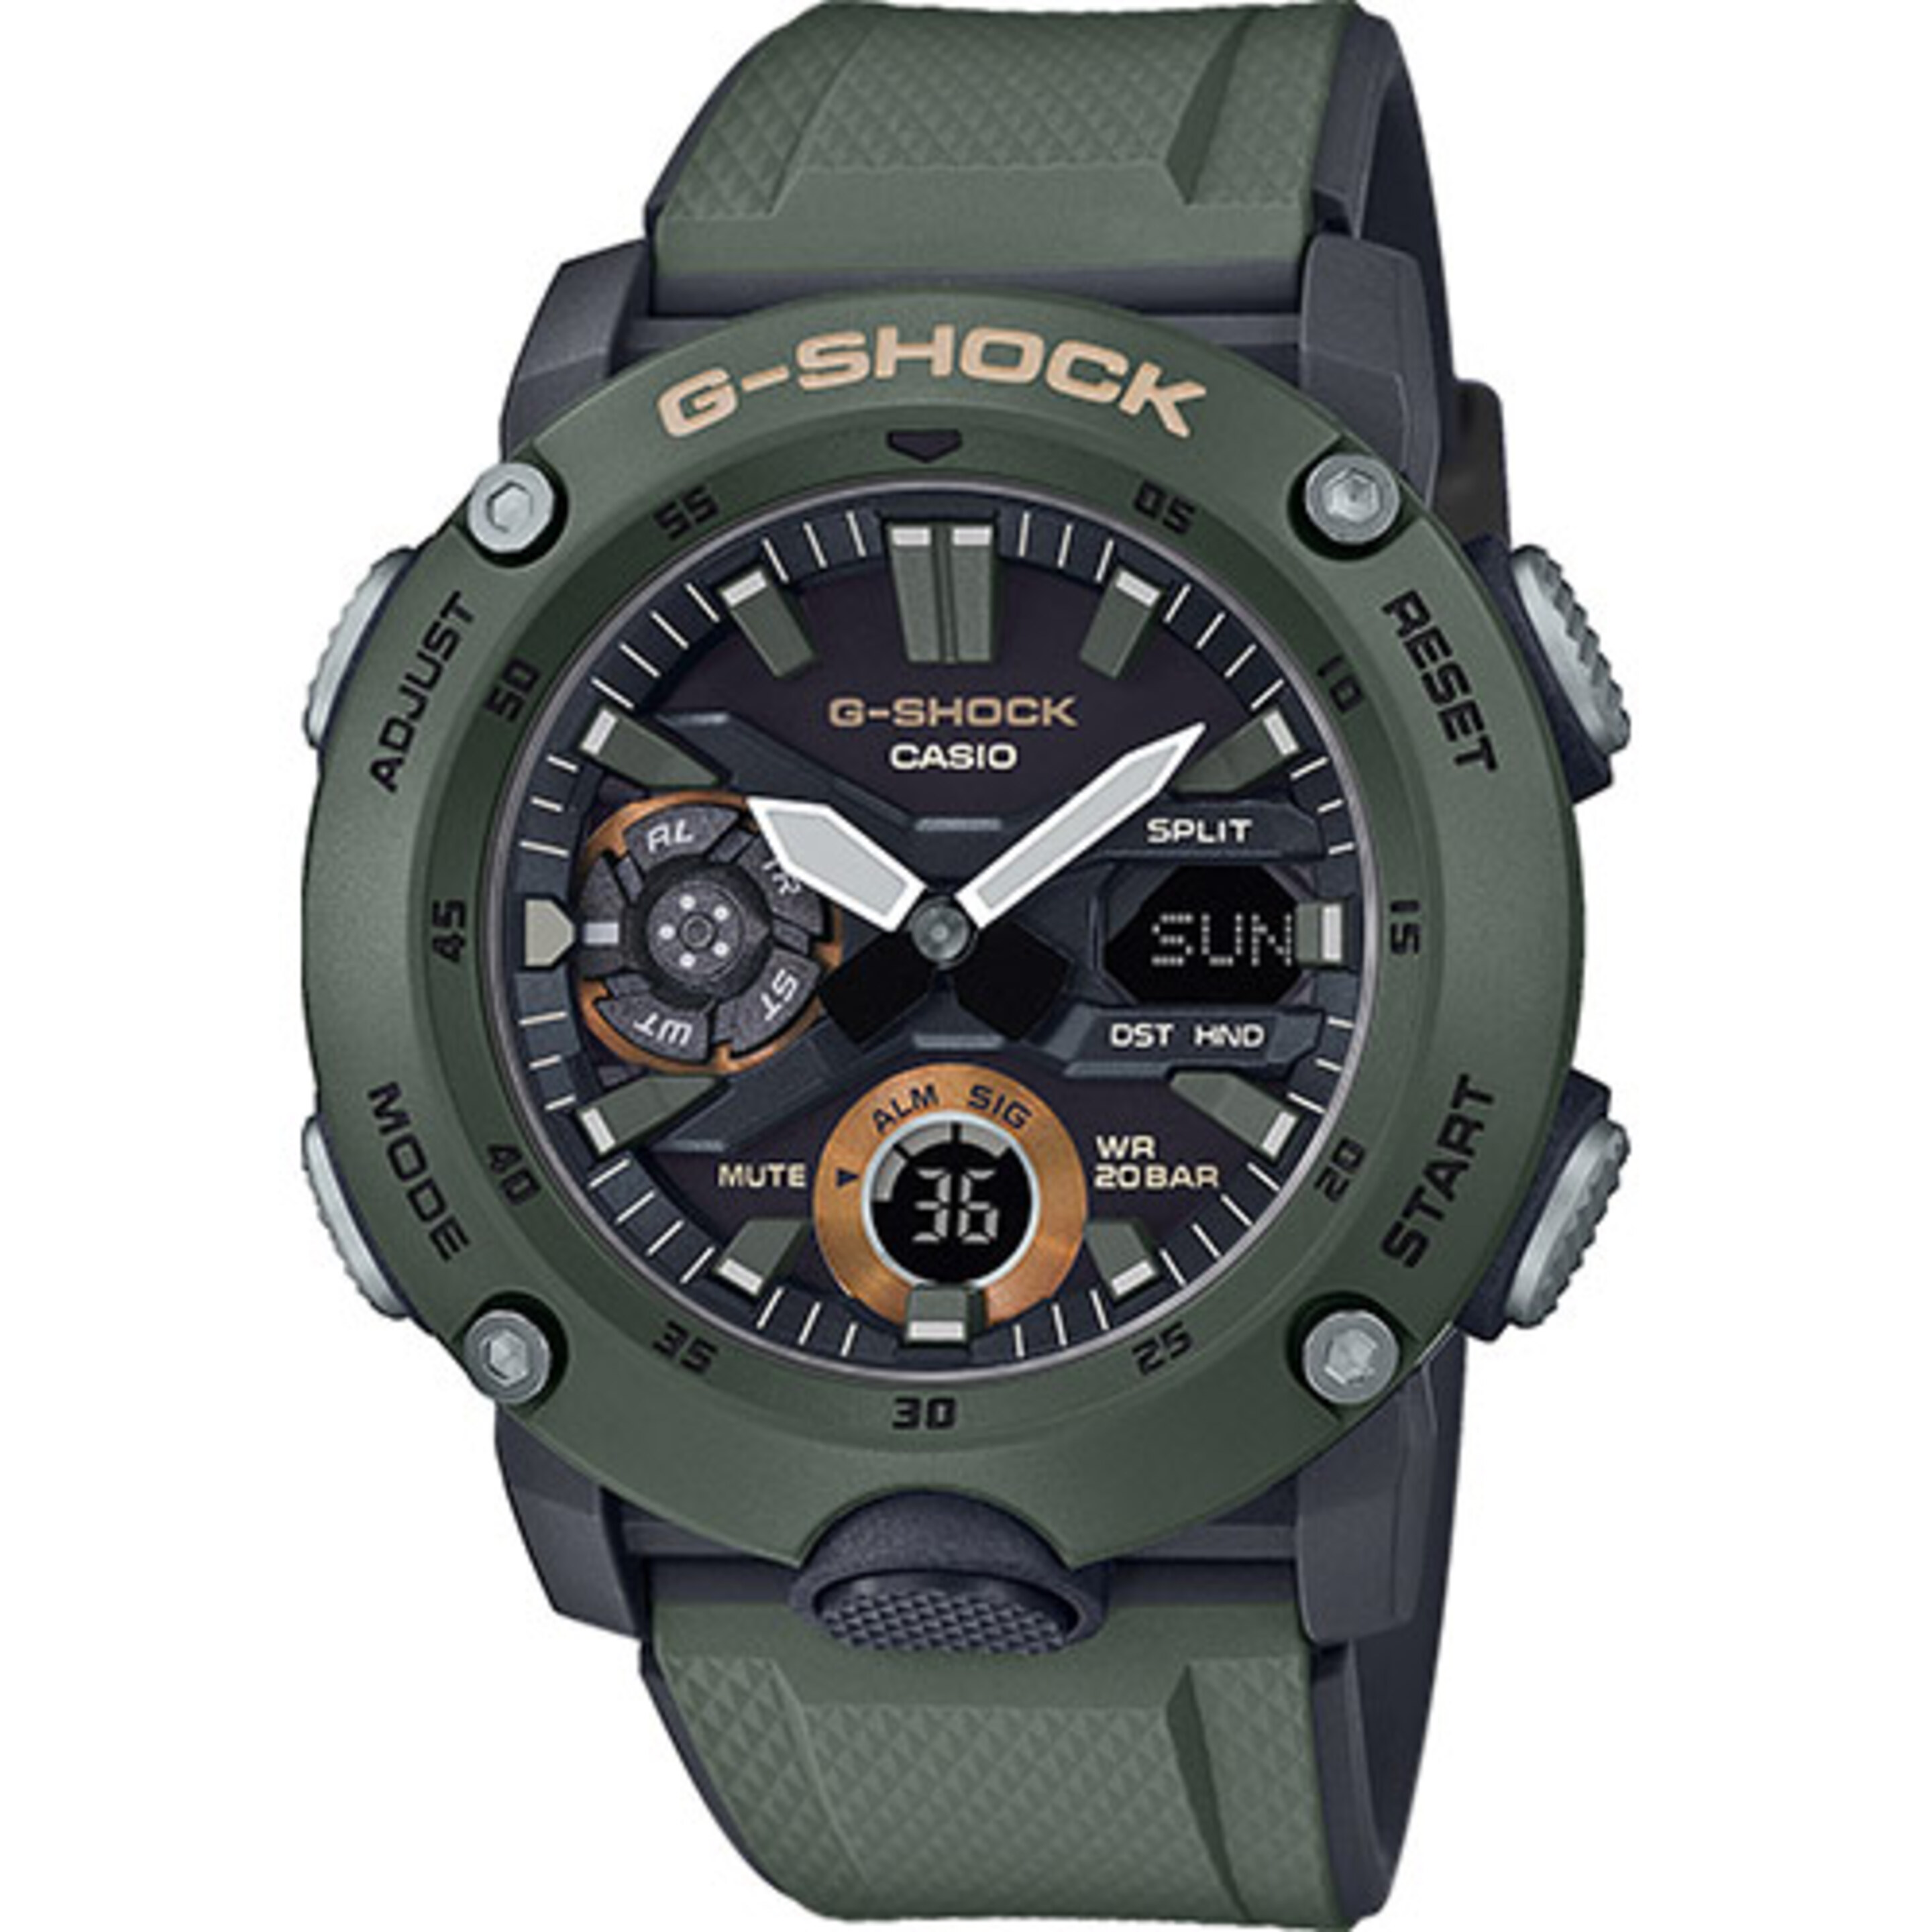 Reloj Casio G-shock Ga-2000-3aer - verde_militar - Reloj Deportivo  MKP